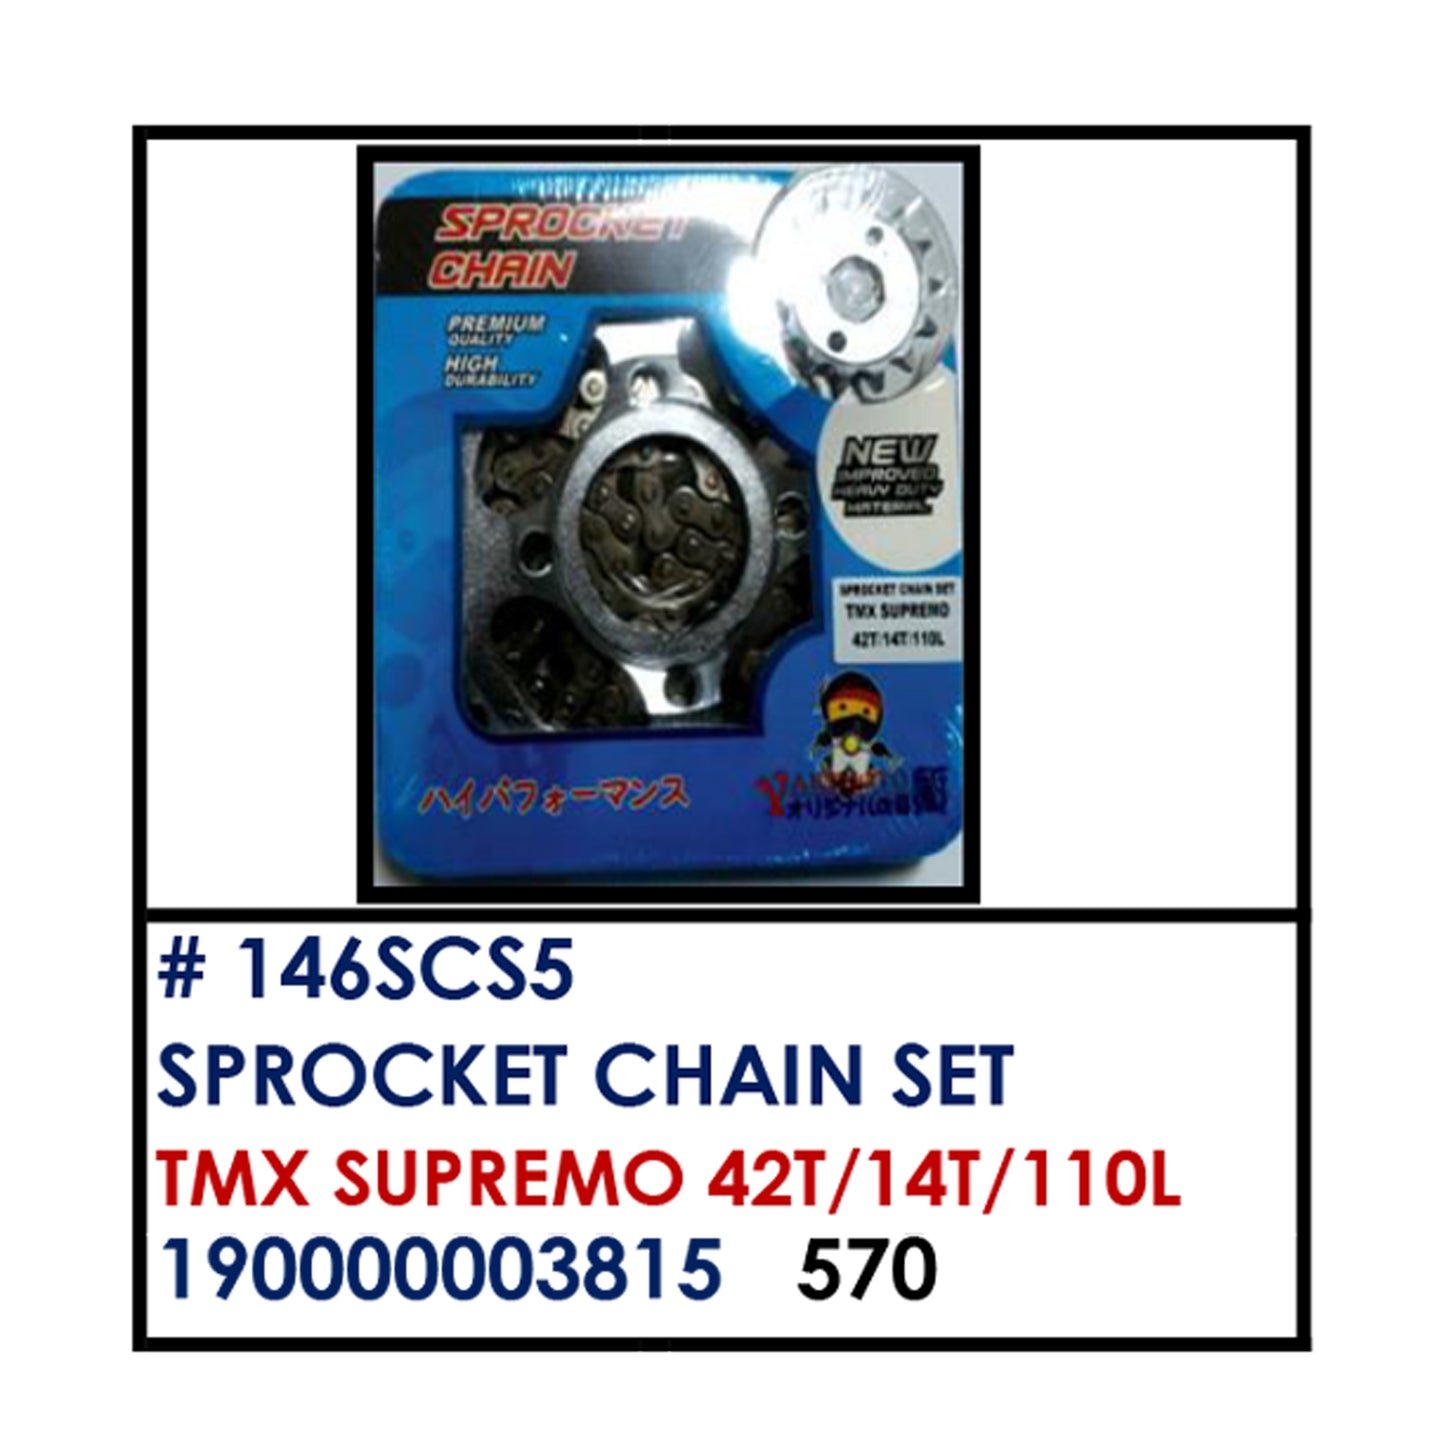 SPROCKET CHAIN SET (146SCS5) - TMX SUPREMO 42T/14T/110L | YAKIMOTO - BESTPARTS.PH